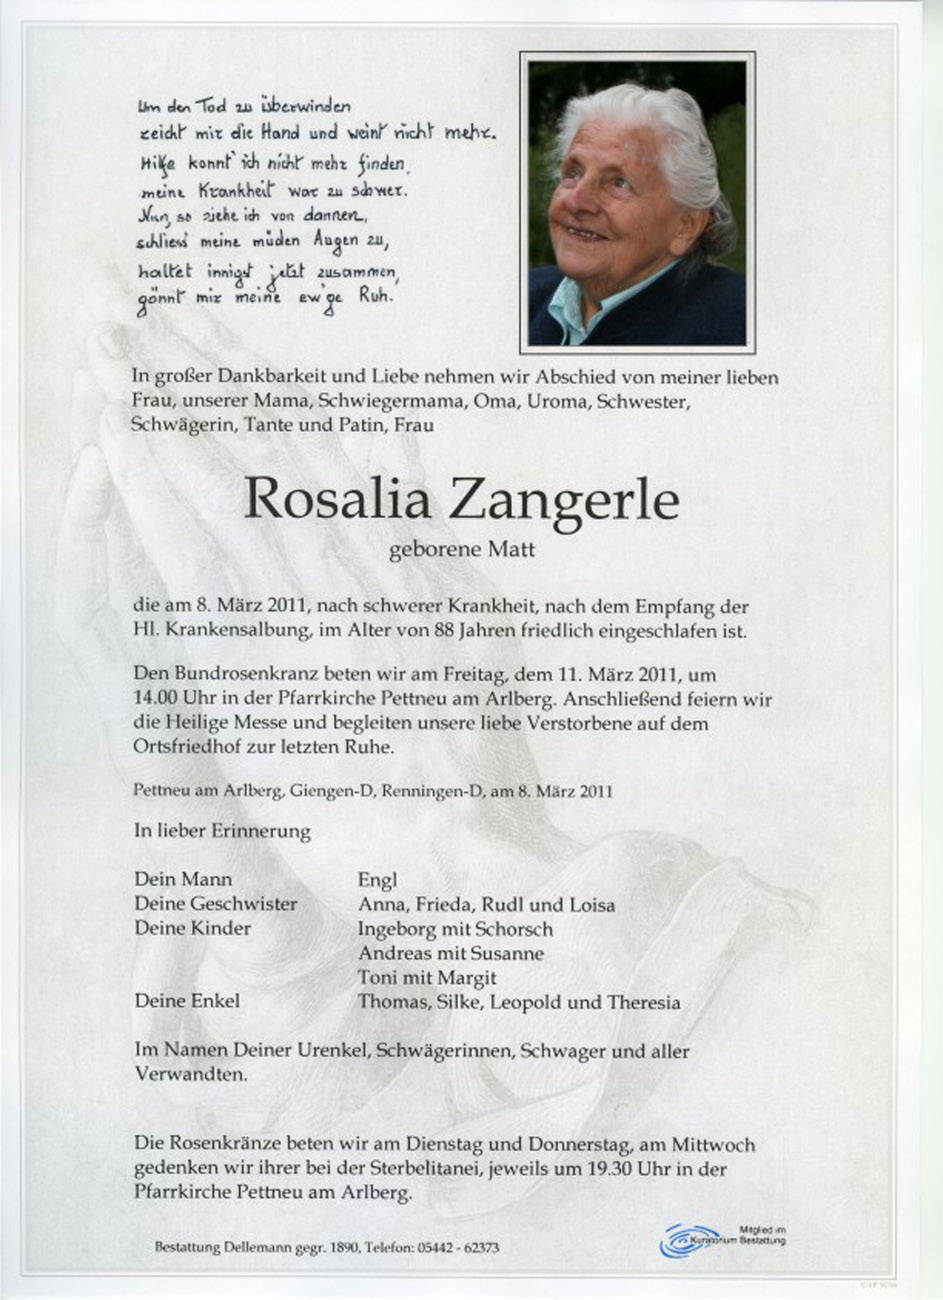   Rosalia Zangerle